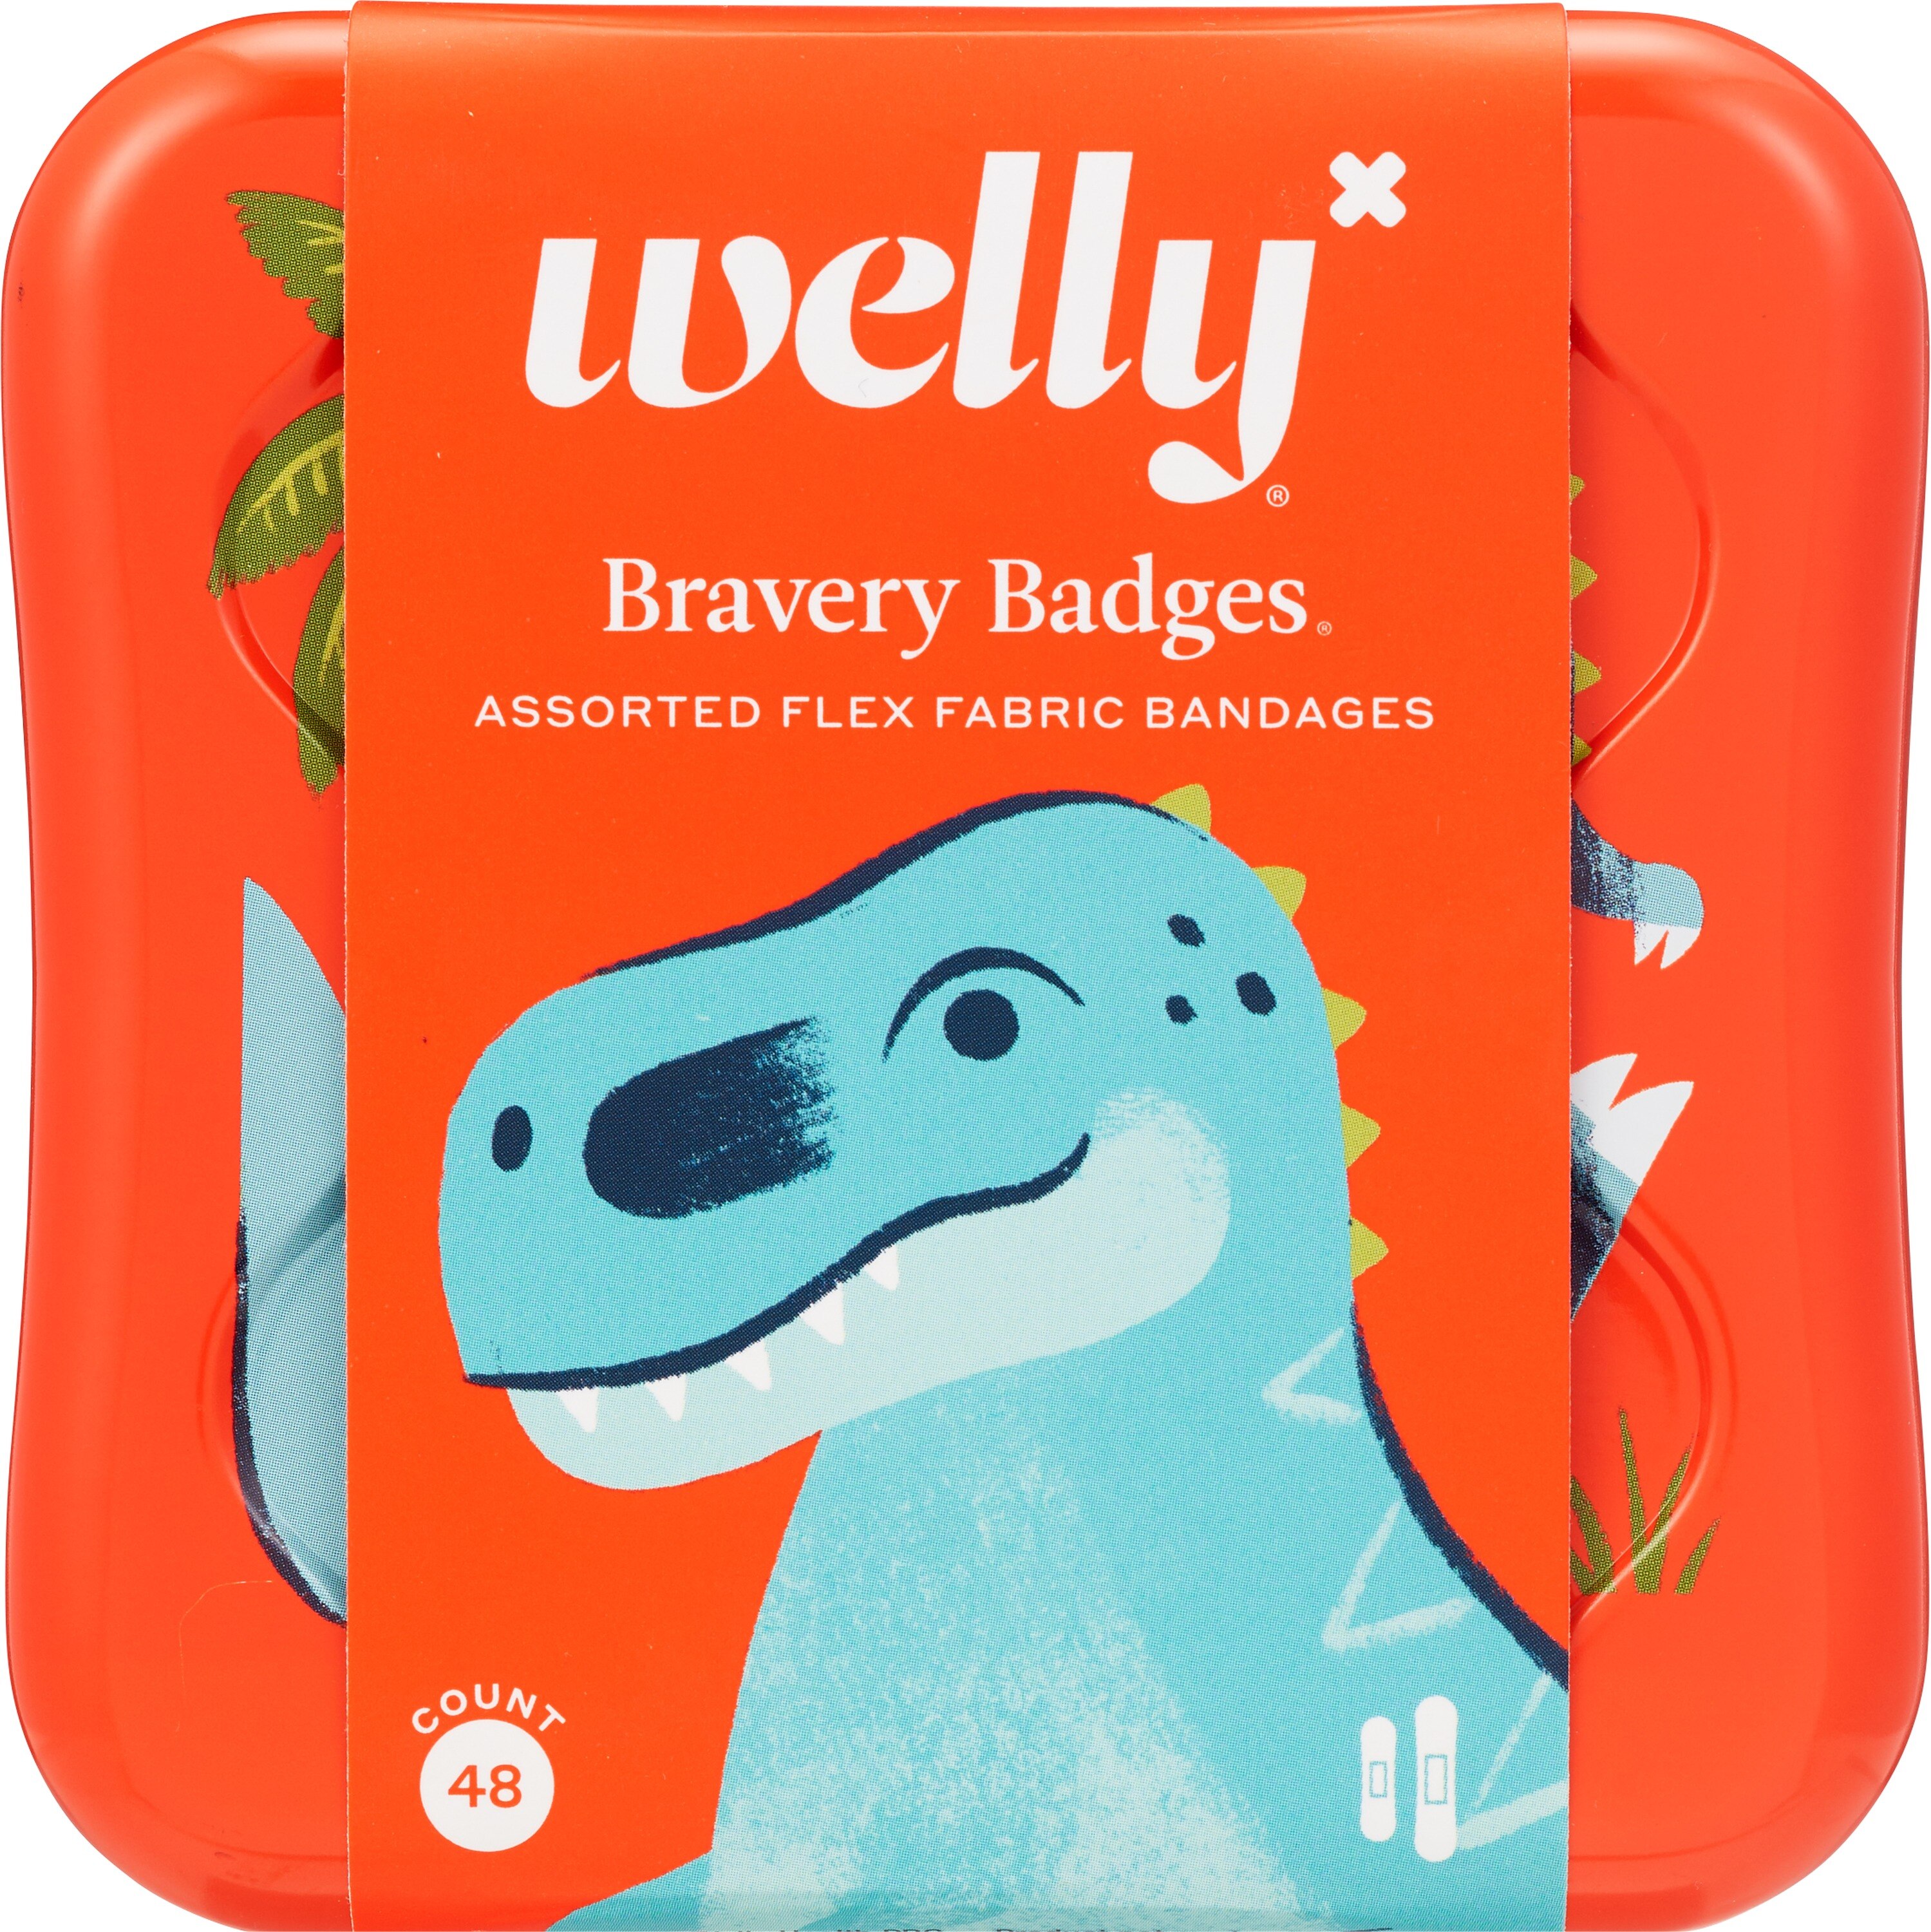 Welly Kids Bravery Badges Assorted Rainbow and Unicorn Flex Fabric Bandages - 48 CT